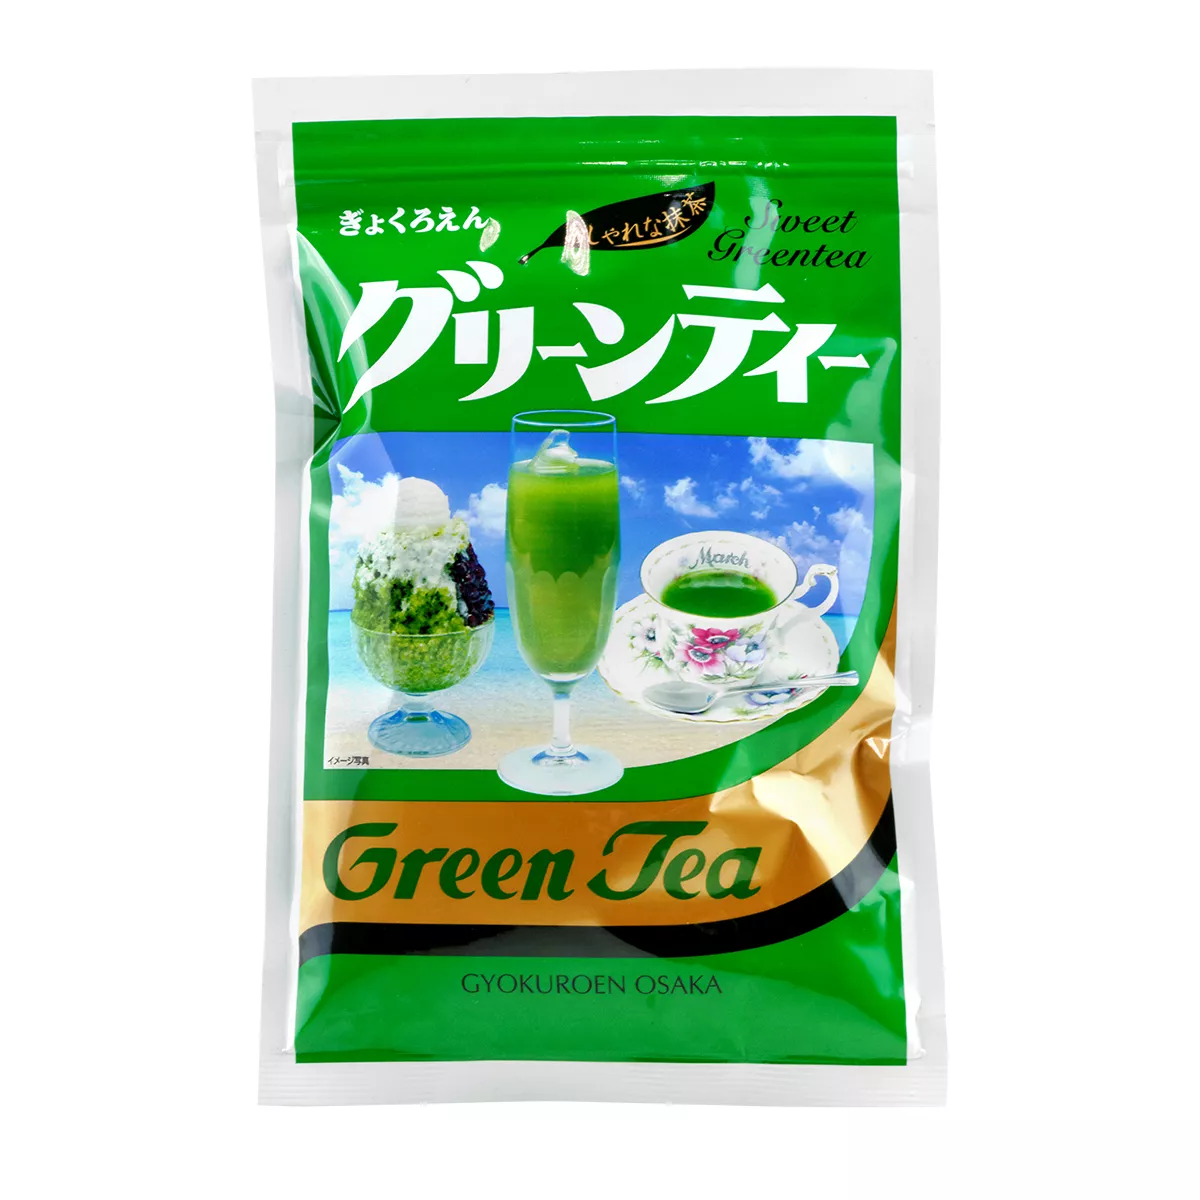 Ceai verde (Matcha) GYOKUROEN 150g, [],asianfood.ro